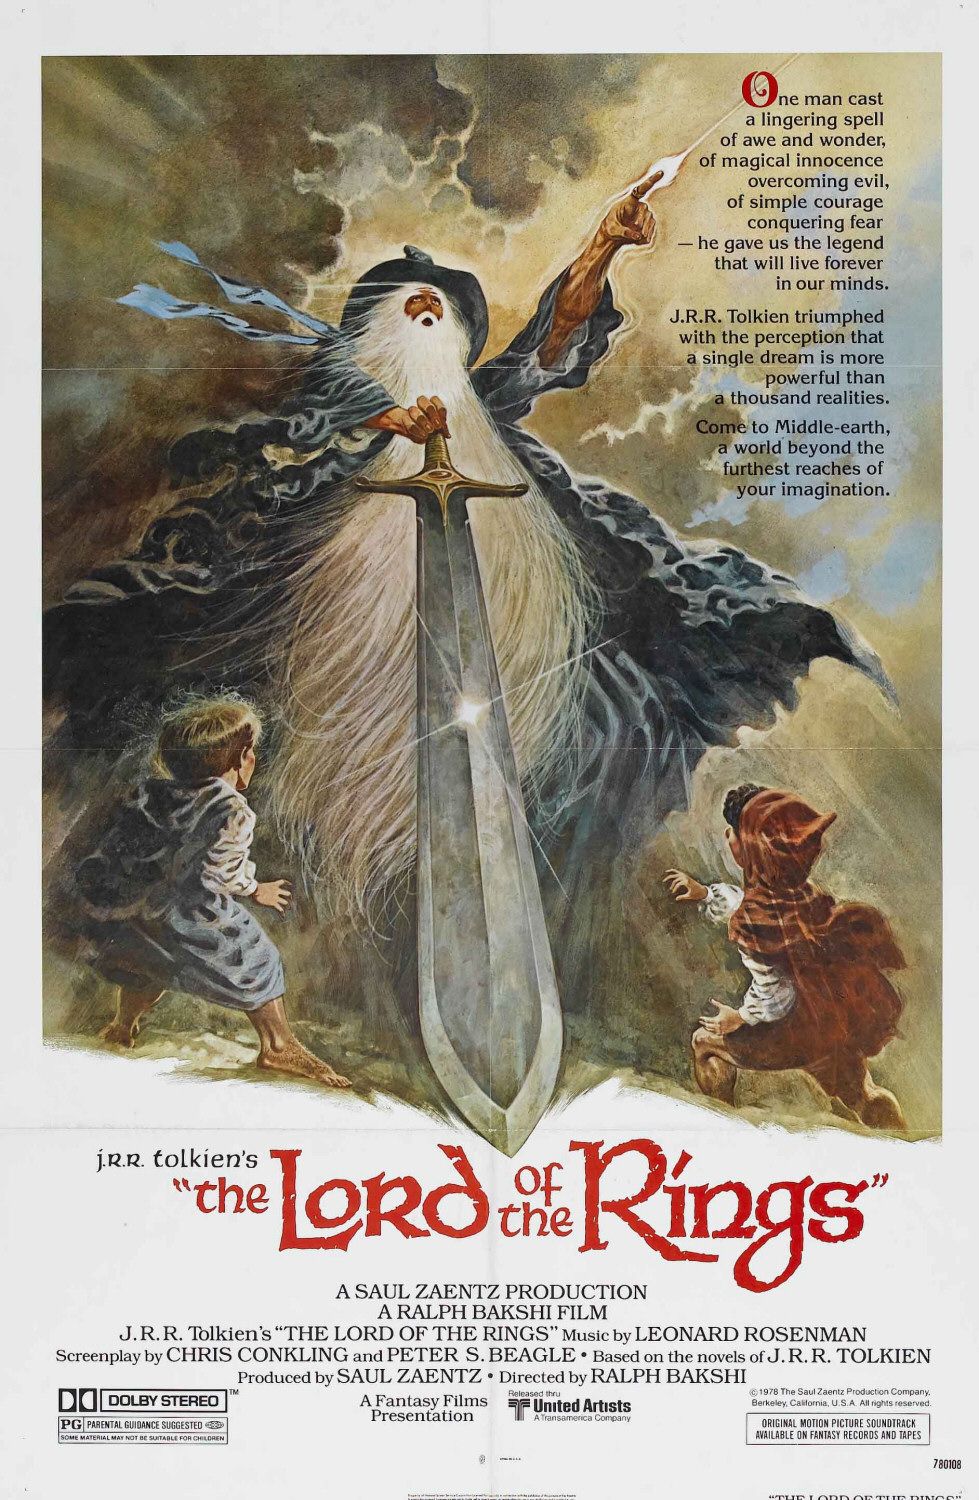 Nonton film The Lord of the Rings layarkaca21 indoxx1 ganool online streaming terbaru